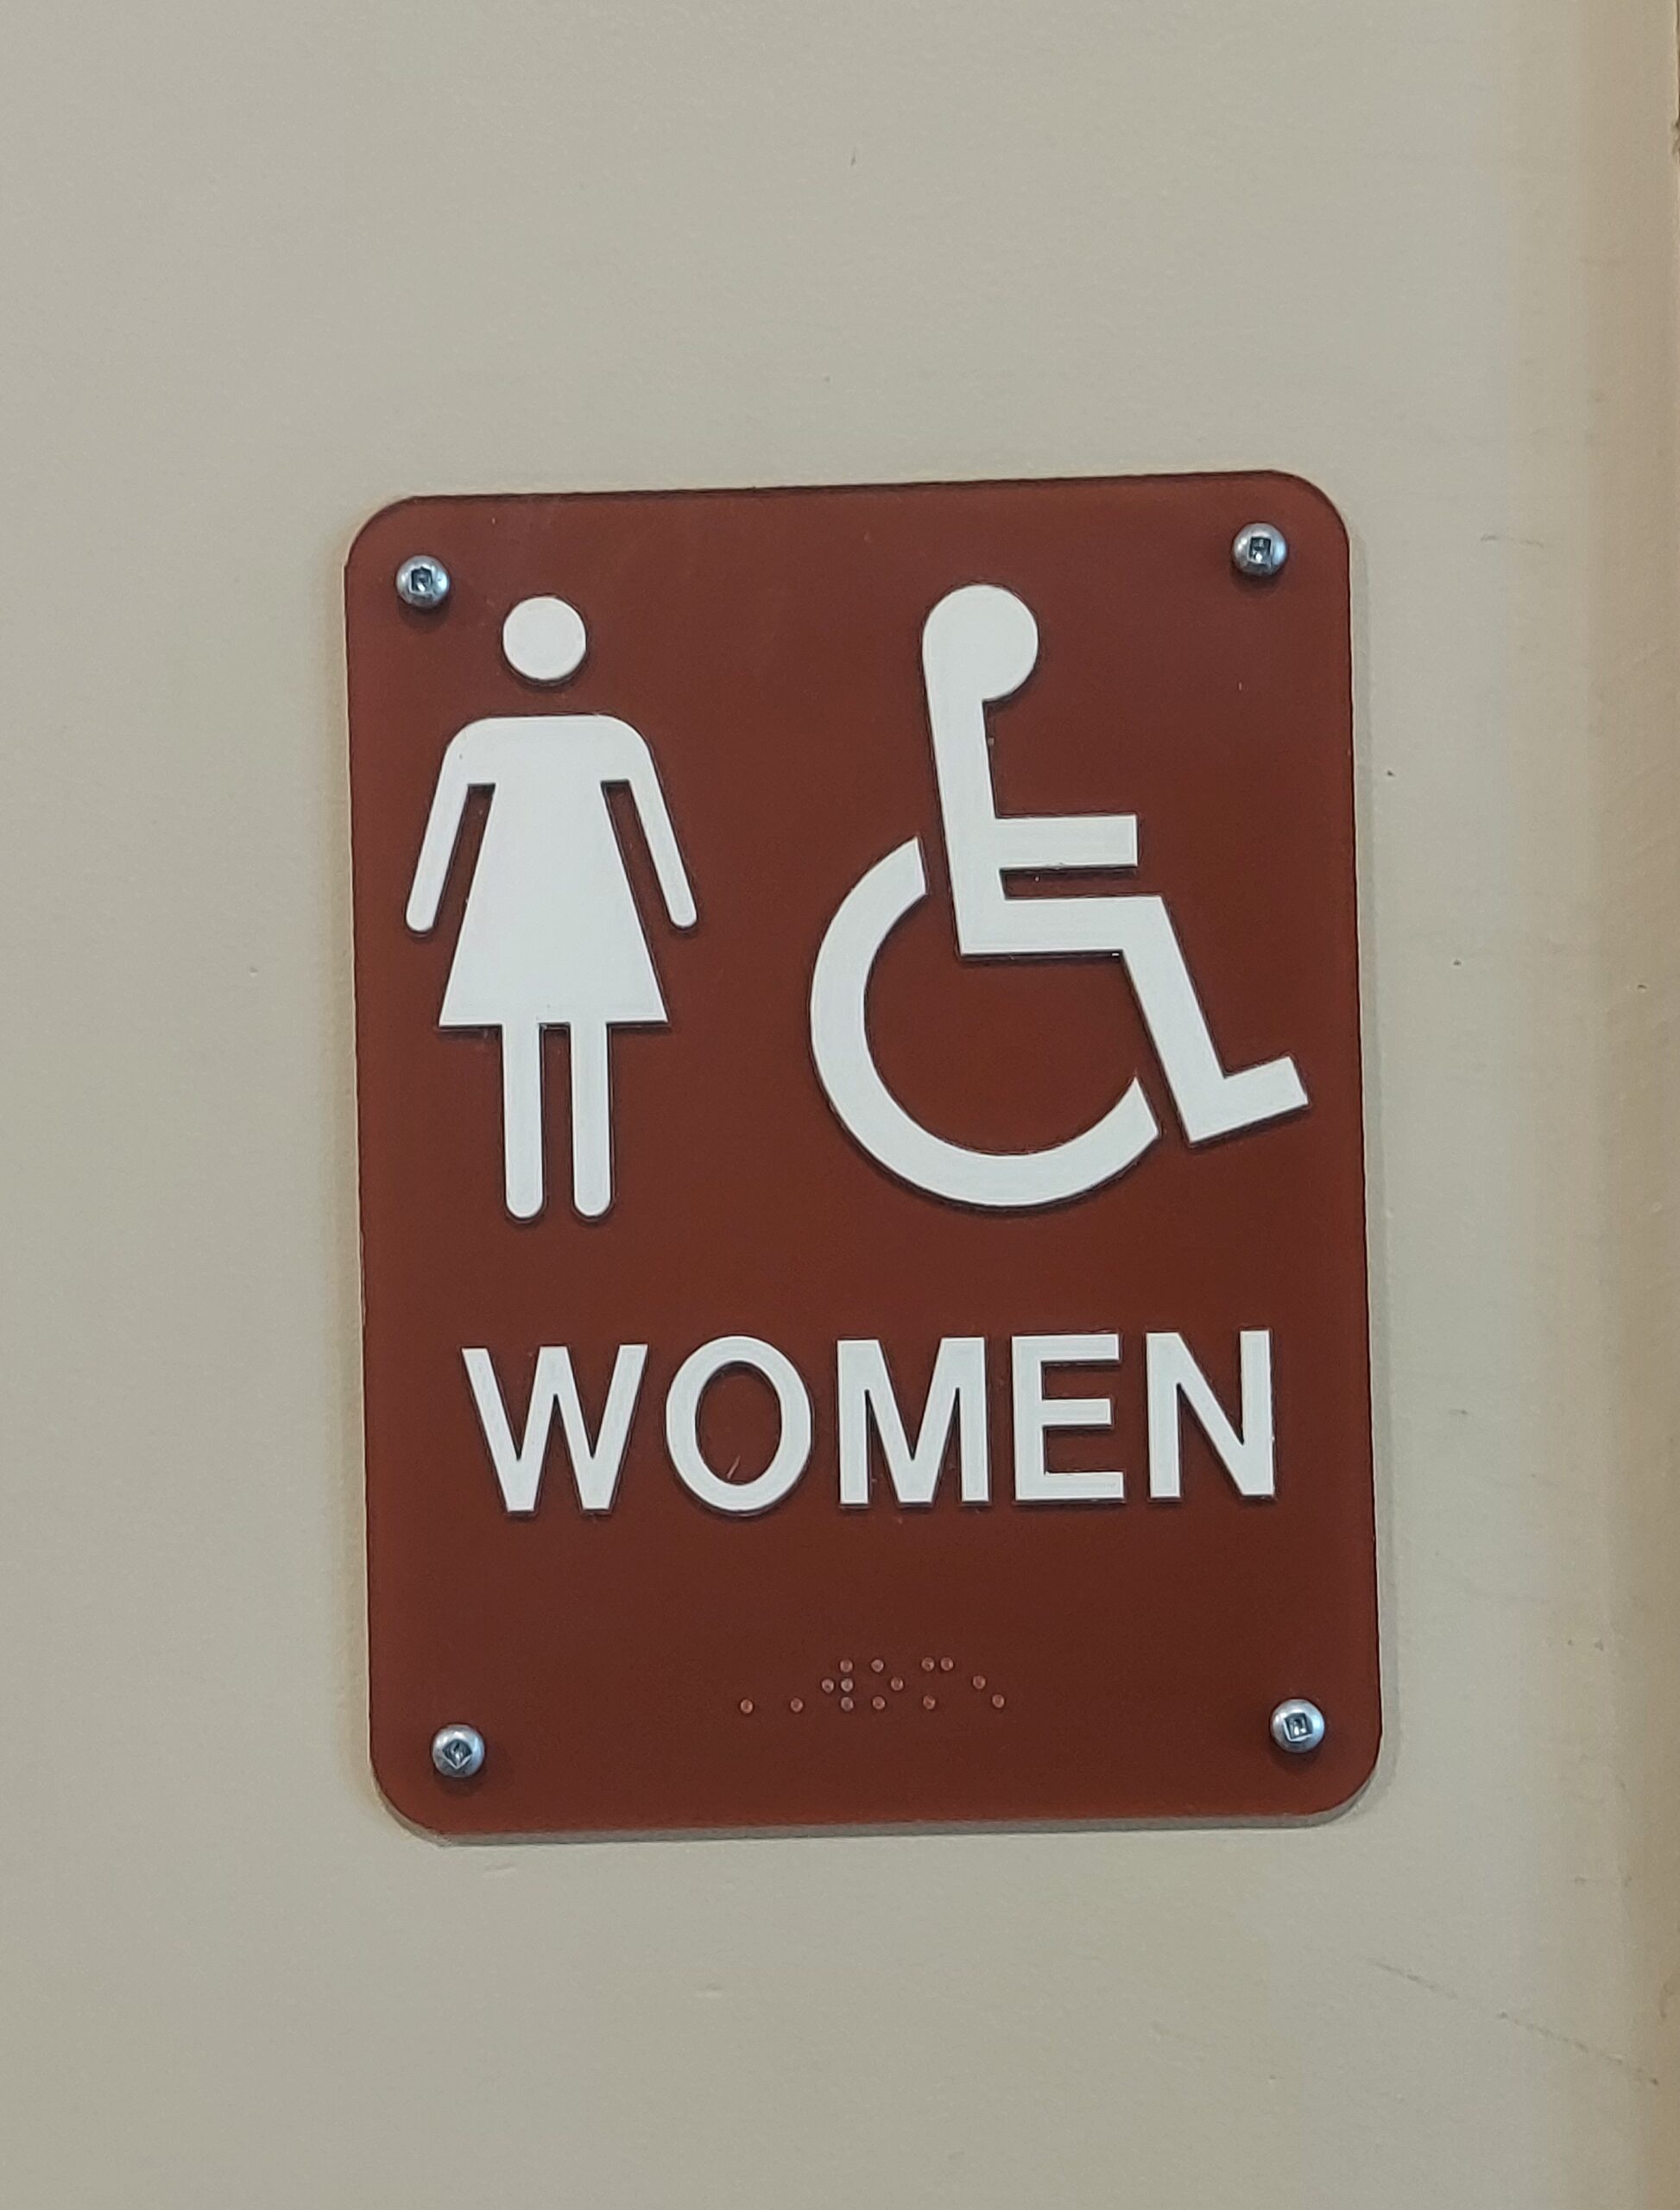 A trans perspective: the bathroom dilemma